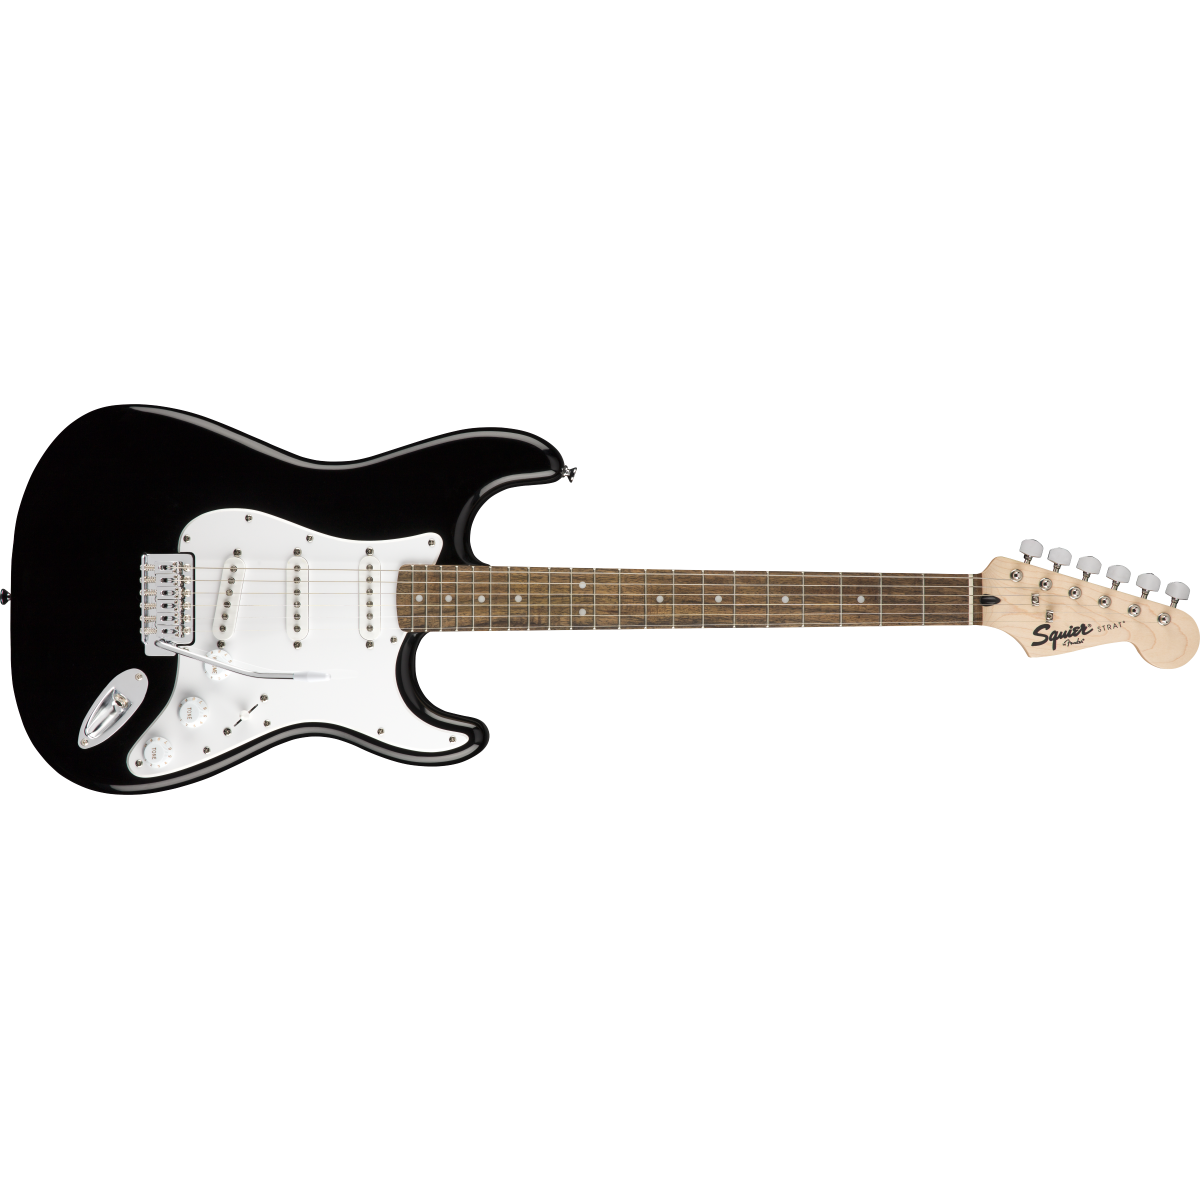 Squier Stratocaster Strat Pack, Black